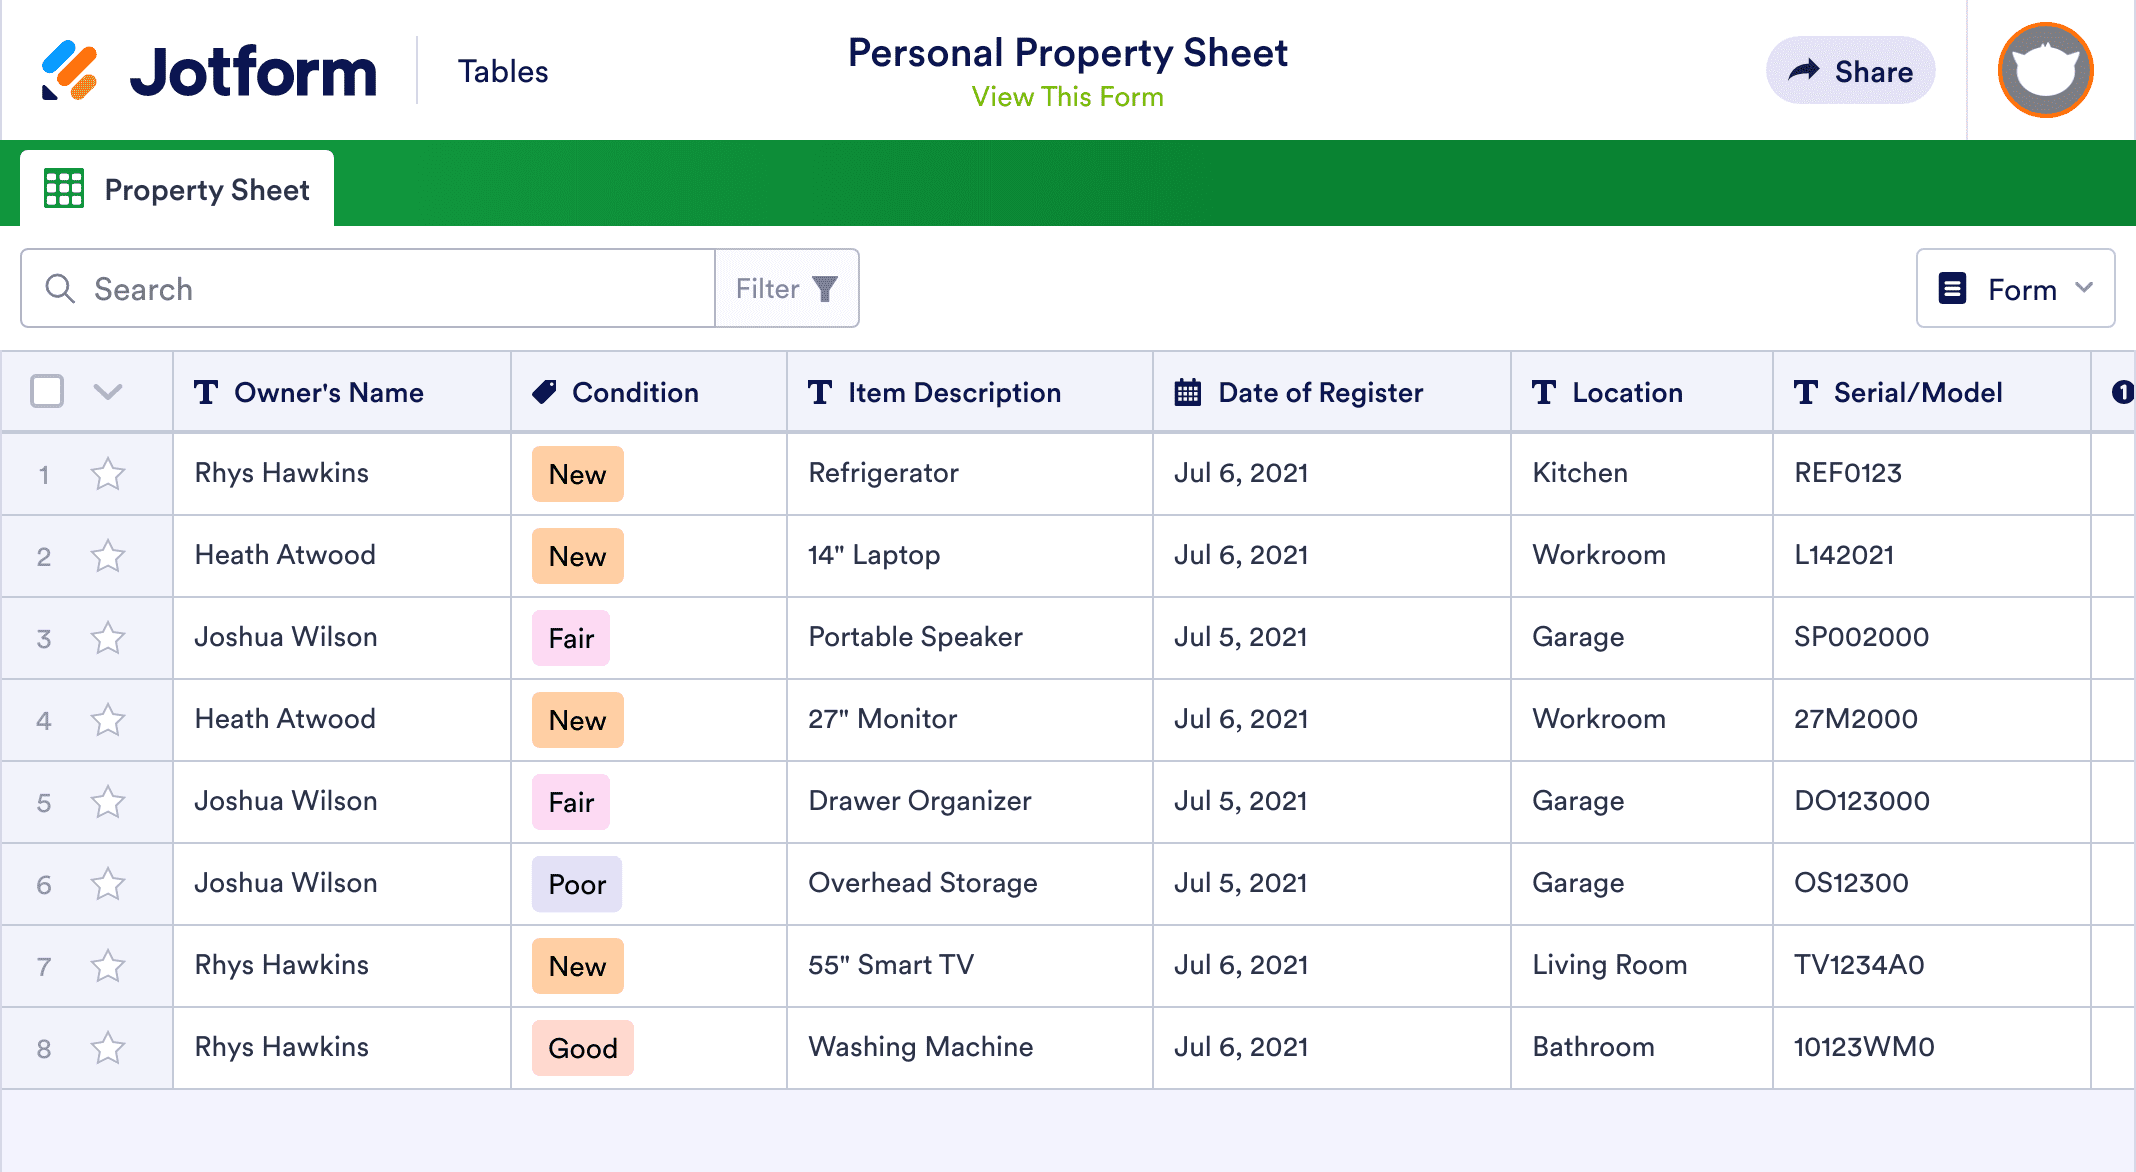 Personal Property Sheet